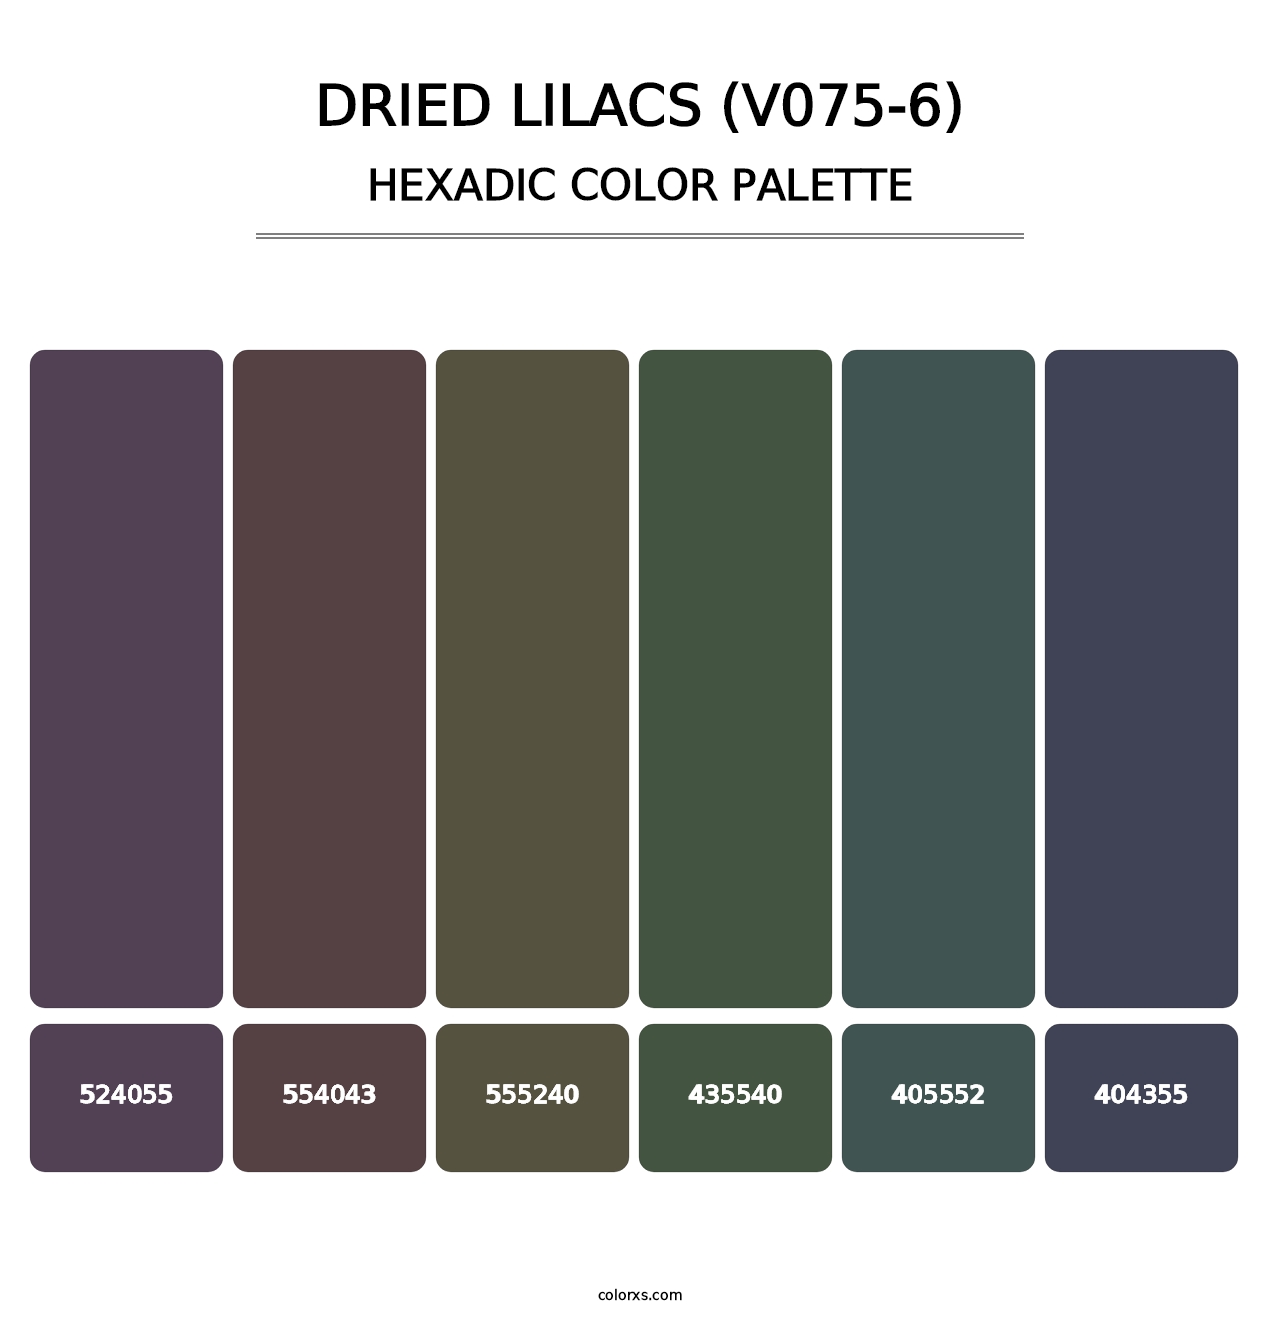 Dried Lilacs (V075-6) - Hexadic Color Palette